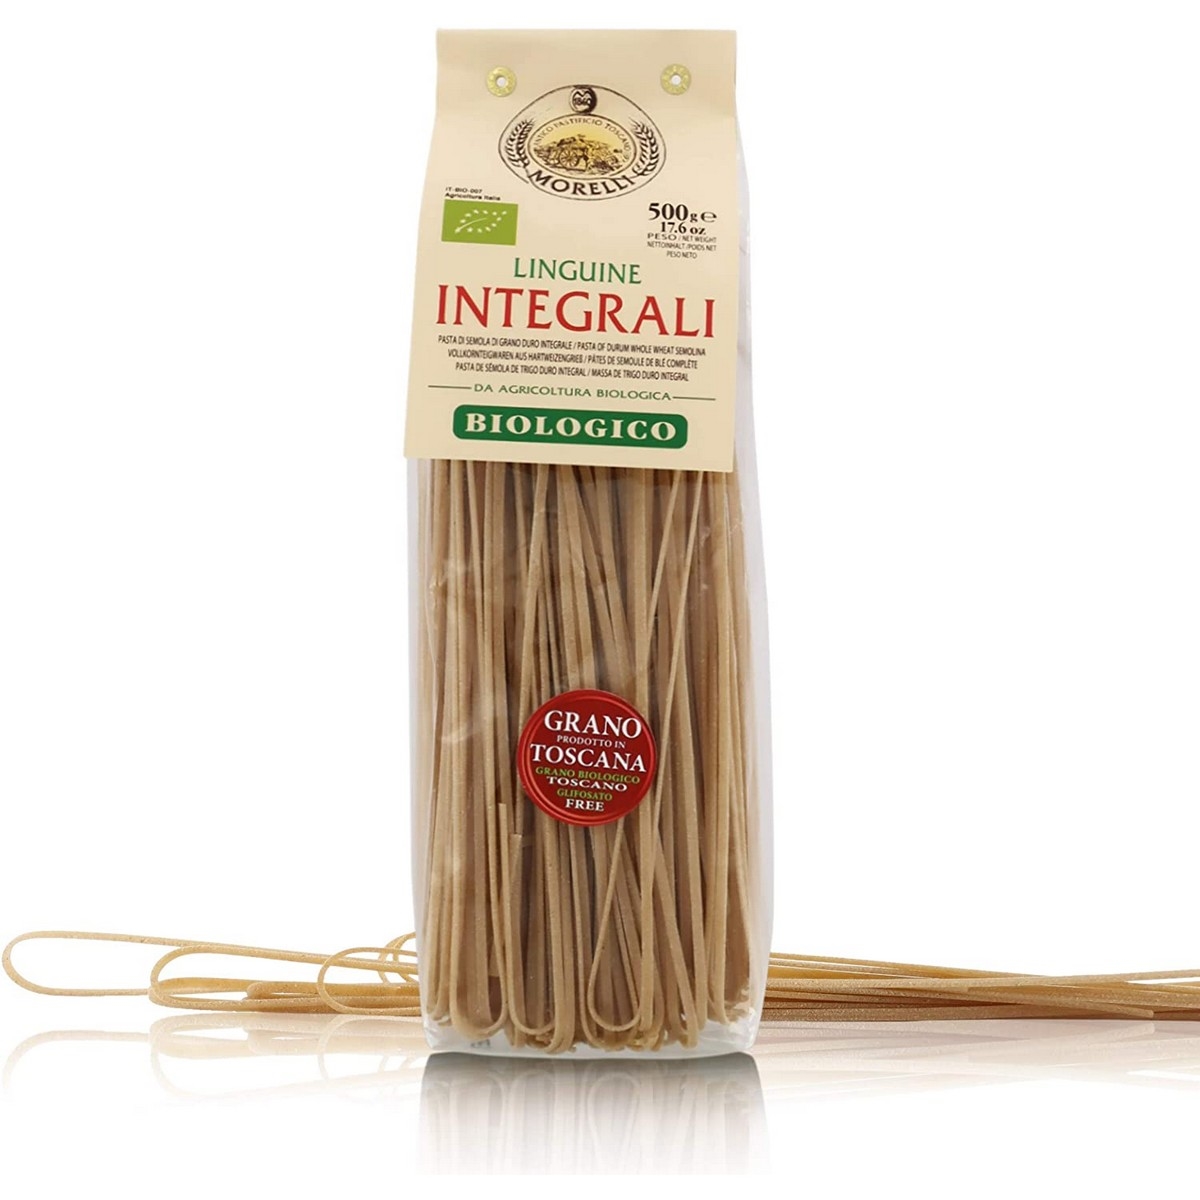 wholemeal pasta - wholemeal linguine - 500 g